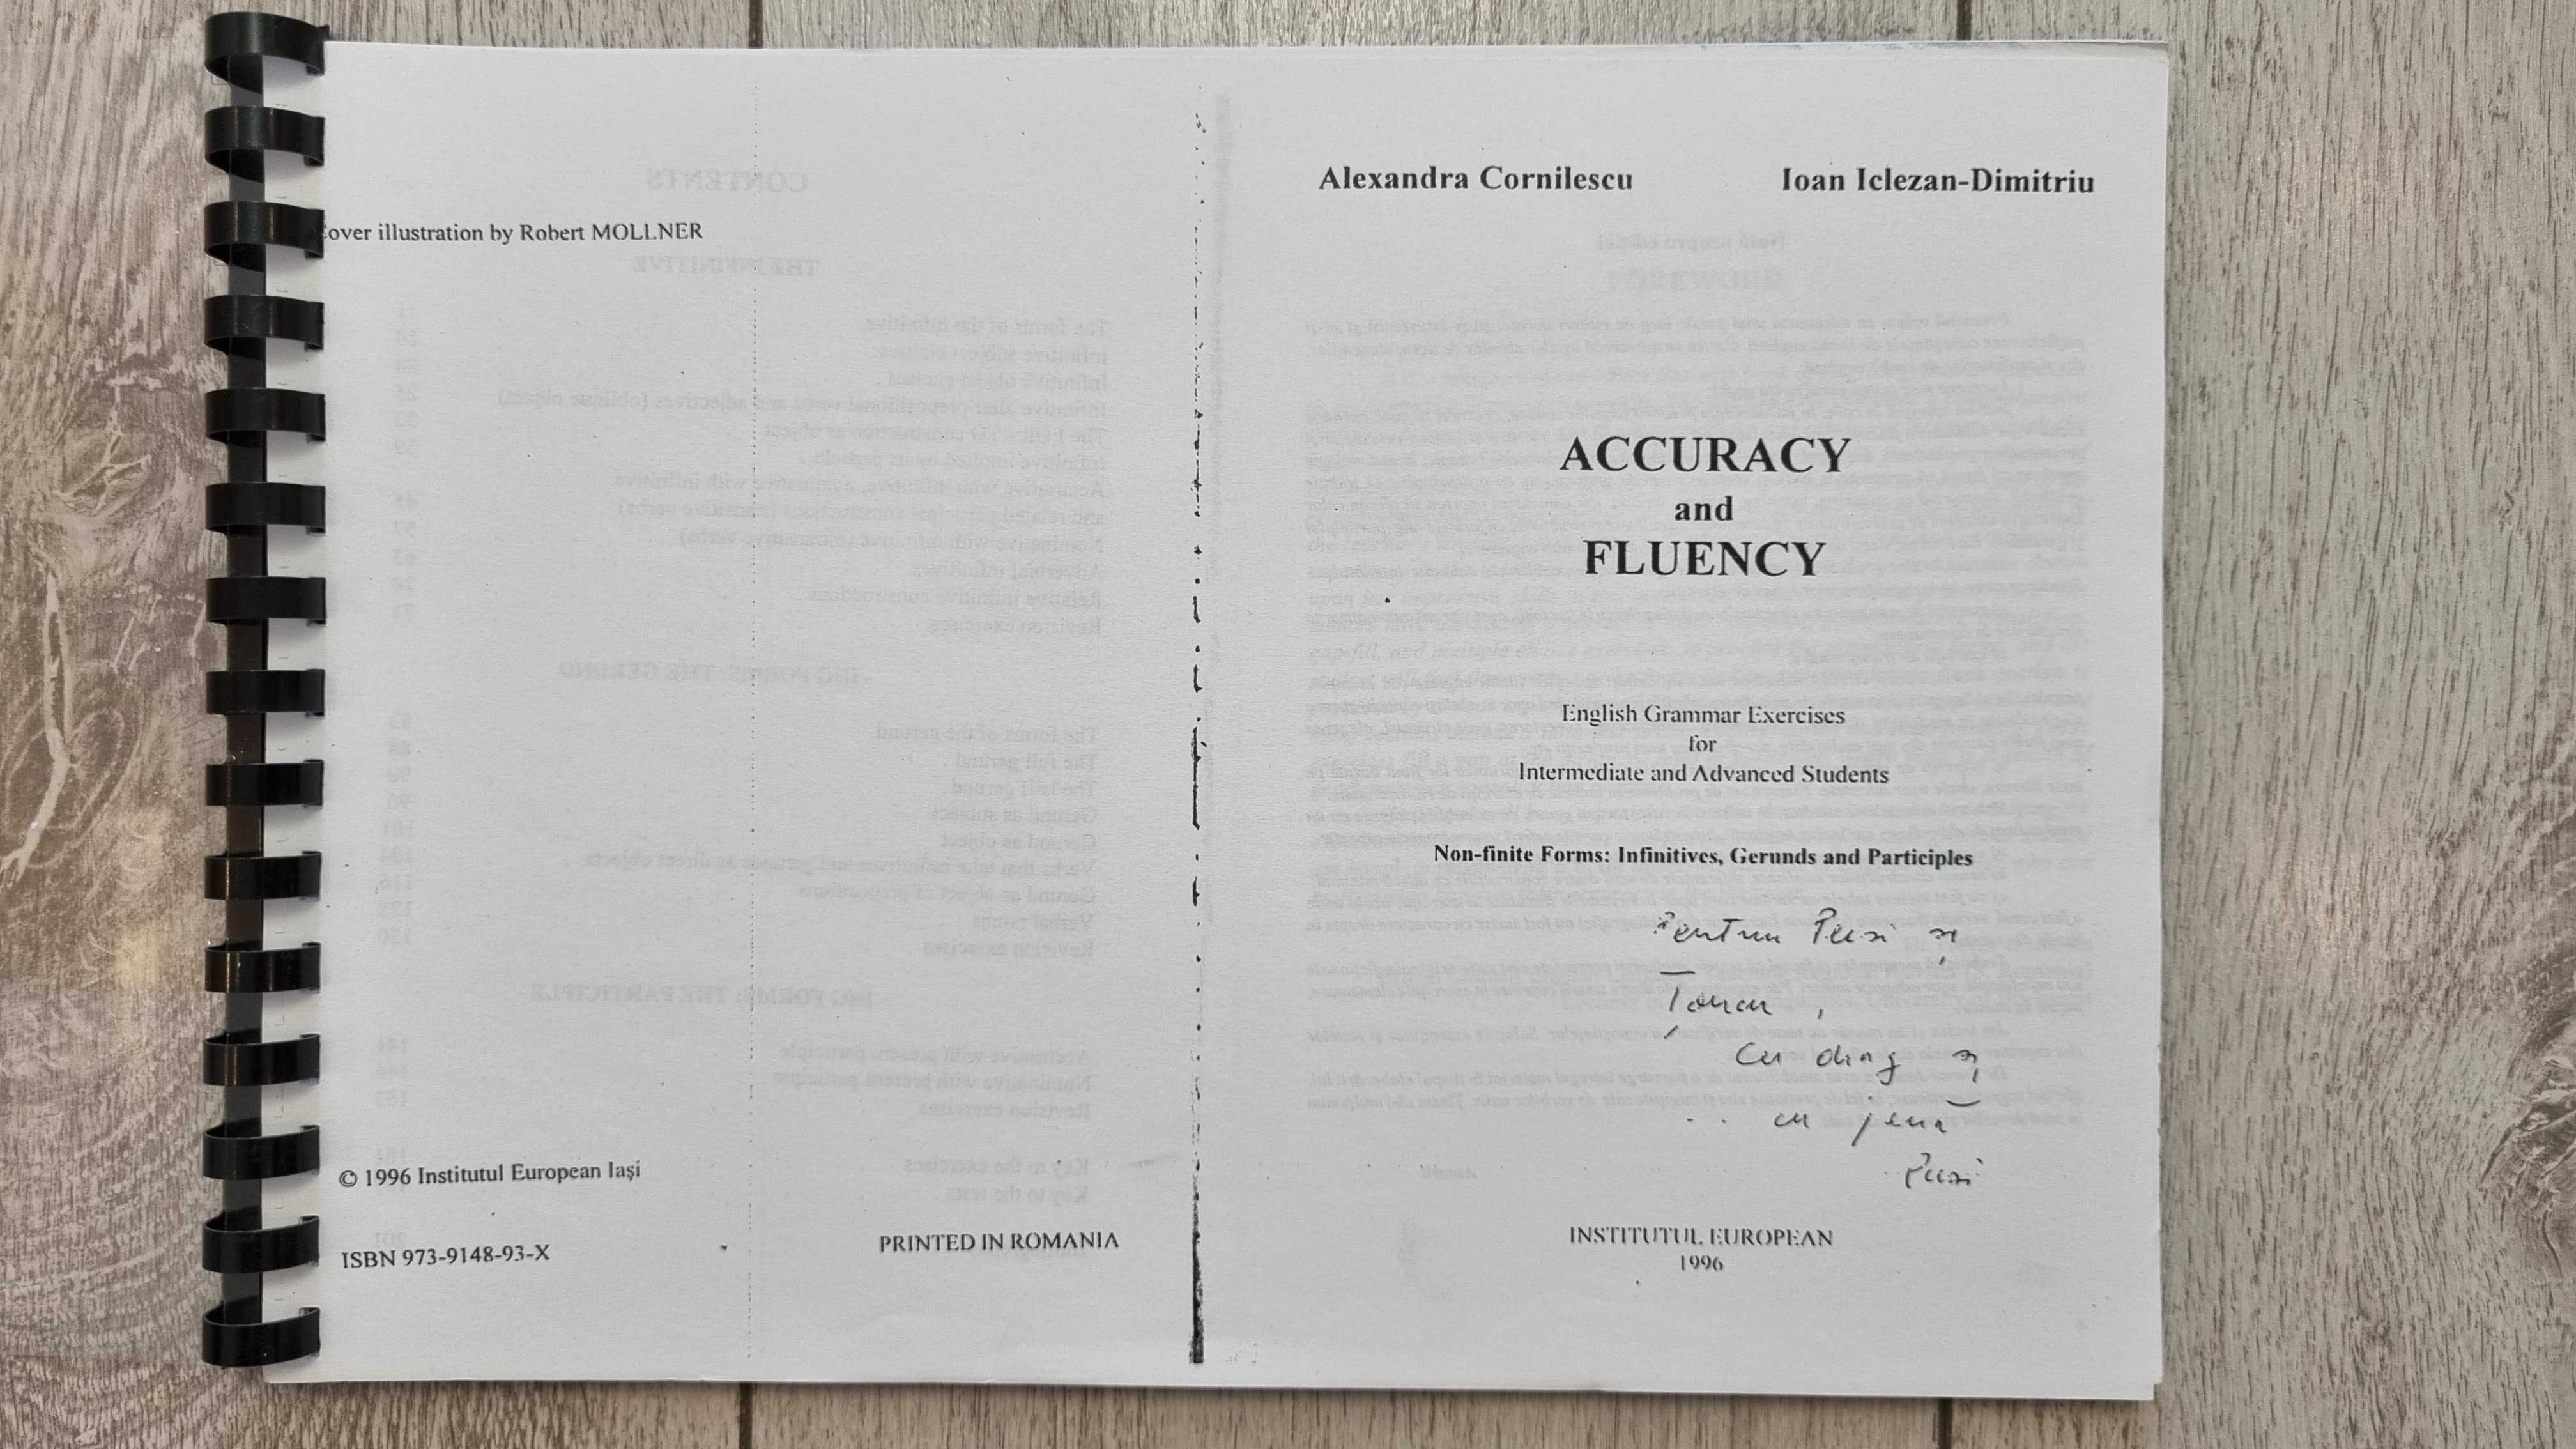 Accuracy and Fluency (Alexandra Cornilescu, Ioan Iclezan-Dimitriu)